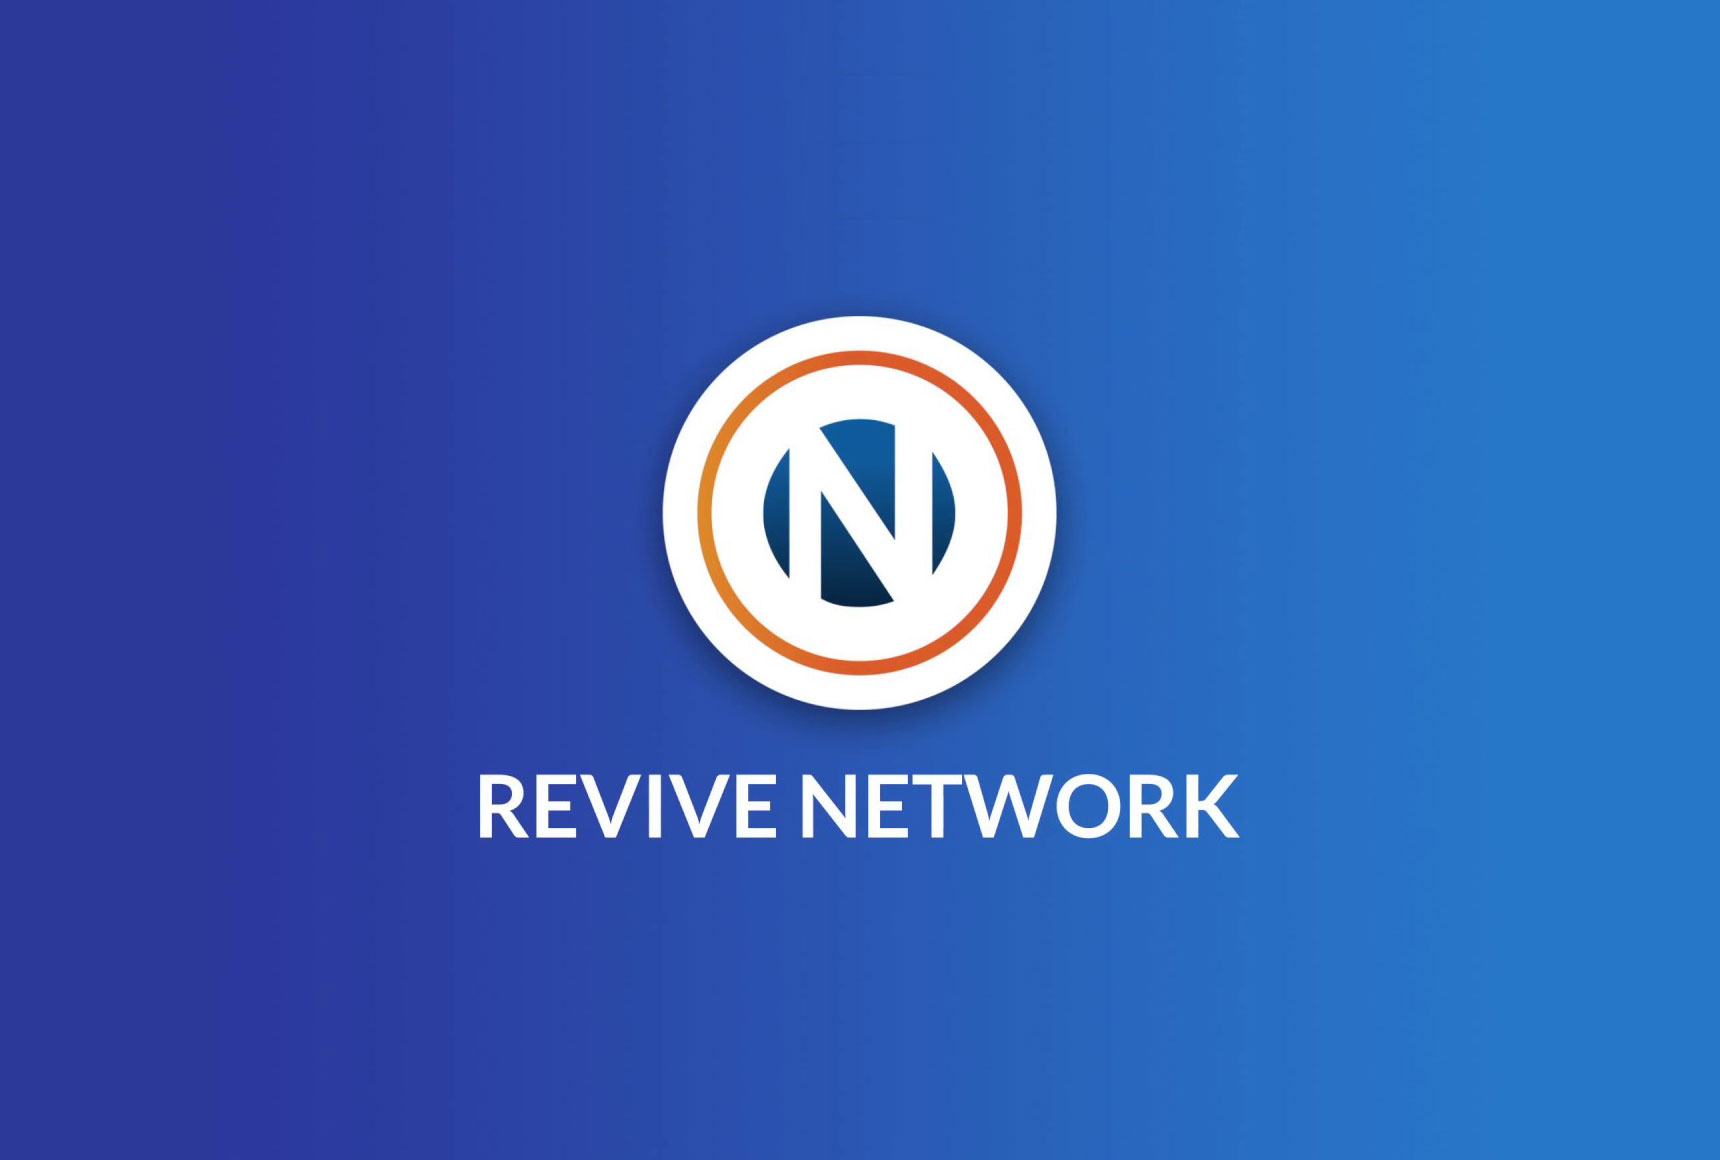 Revive Network masthead image